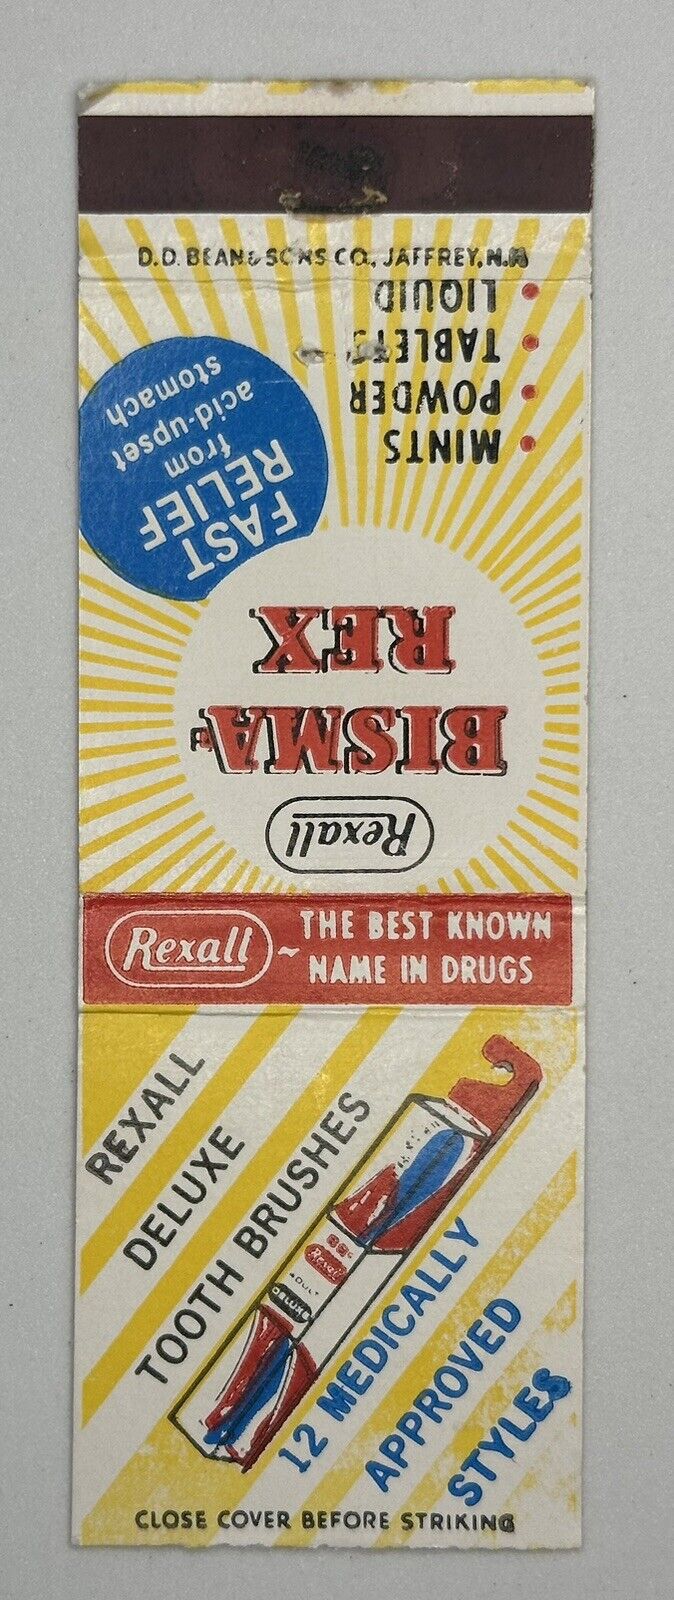 Vintage Matchbook Cover / Rexall Toothbrush / Bisma Rex / Advertisement